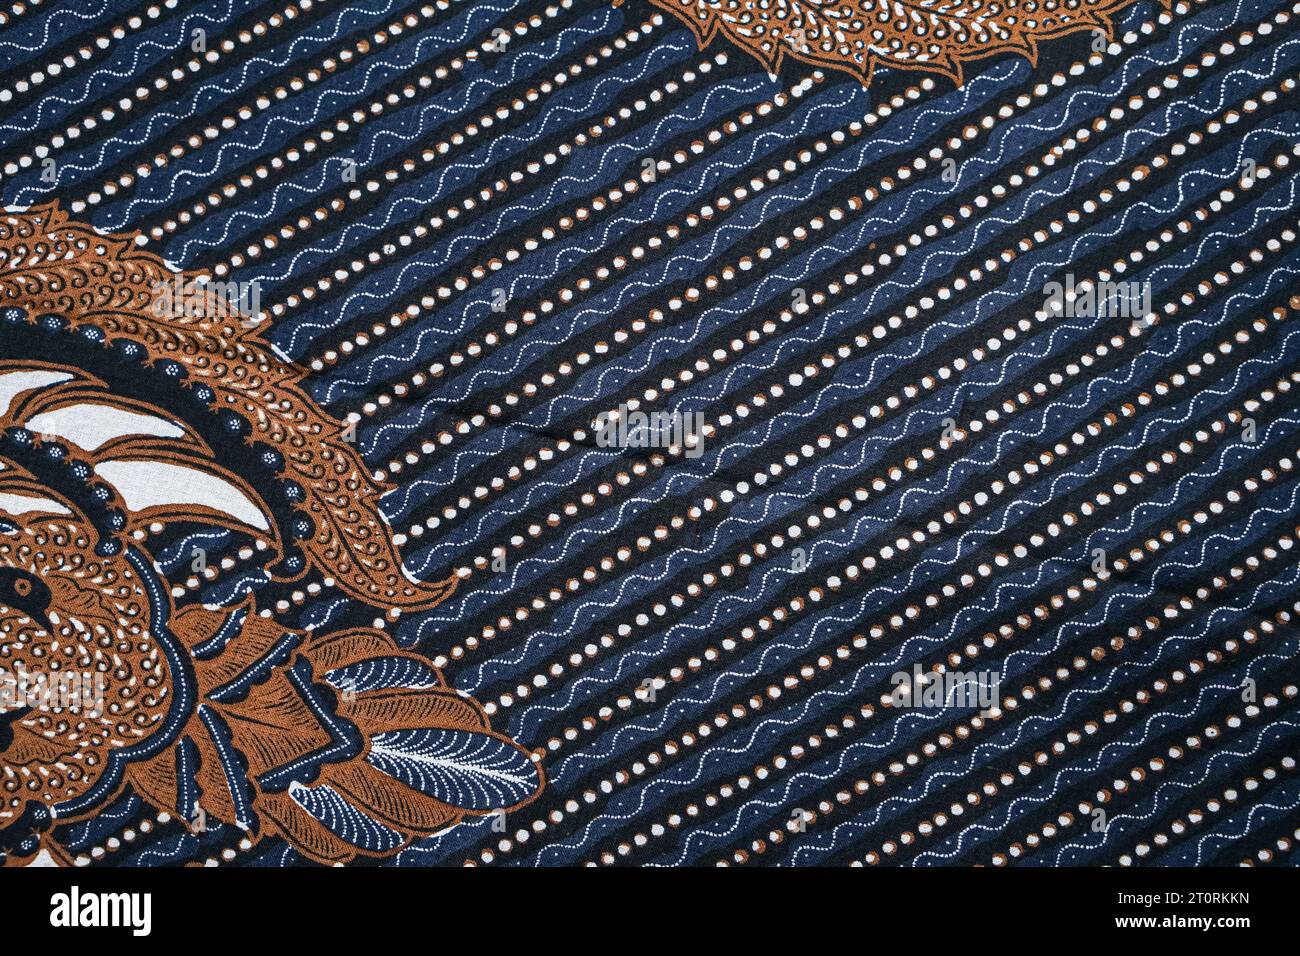 Batik cloth craftsmen from indonesia Stock Photo